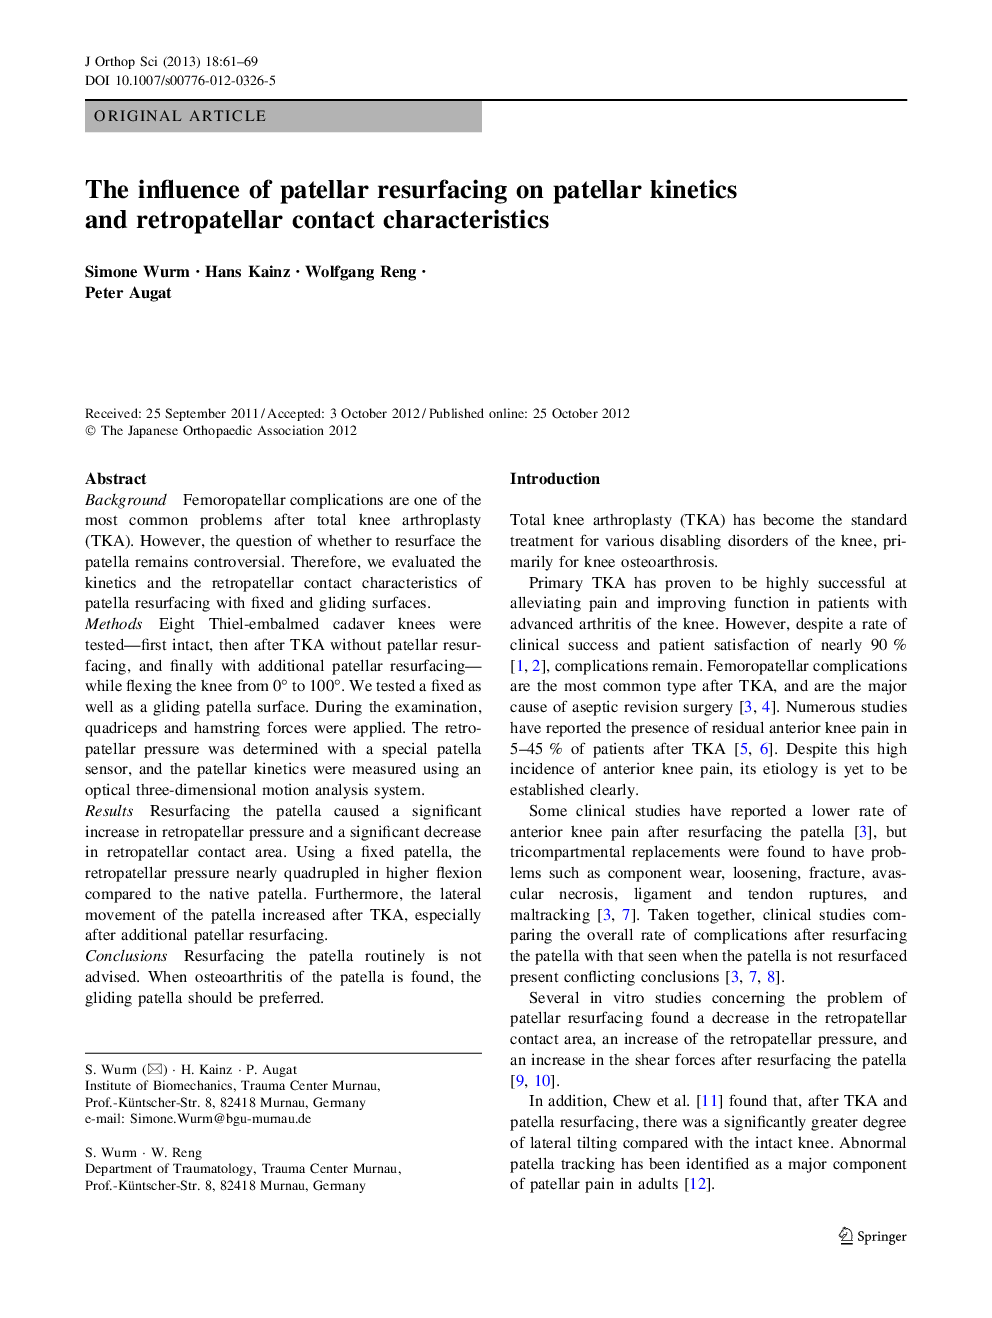 The influence of patellar resurfacing on patellar kinetics and retropatellar contact characteristics